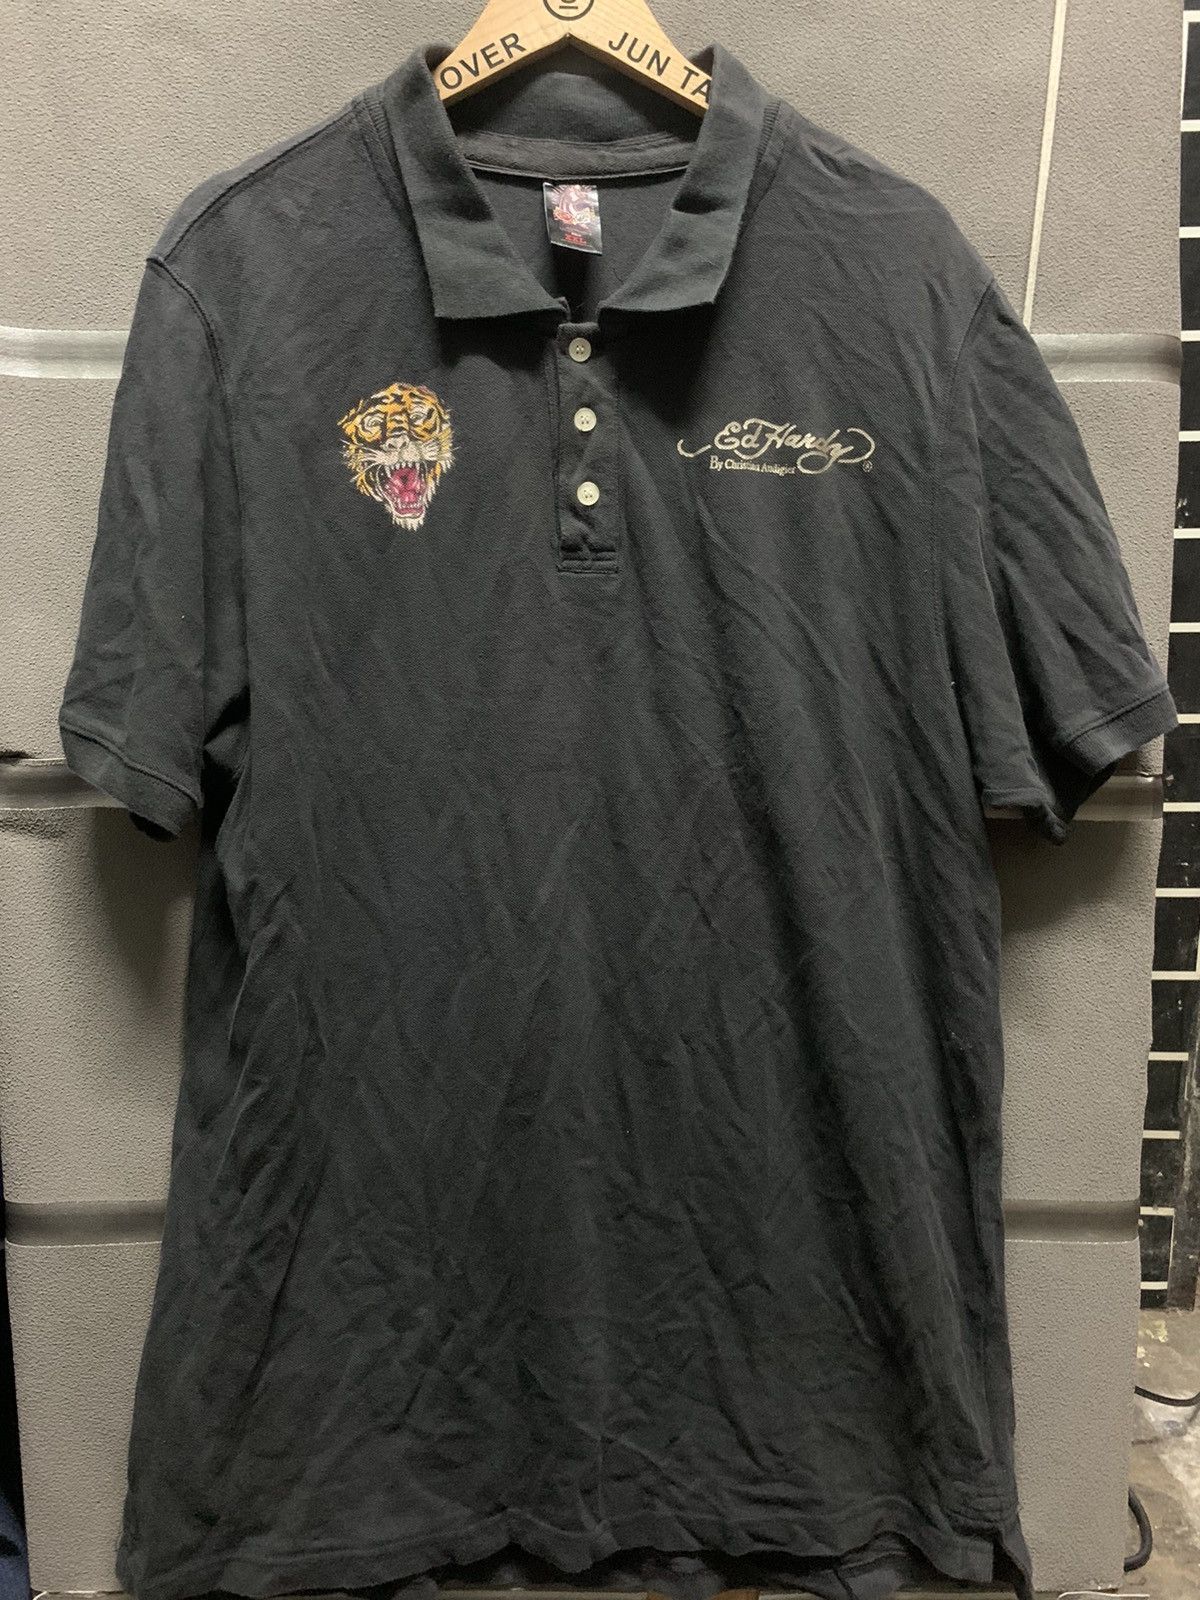 Christian Audigier - Ed Hardy Diamond Tiger Polo shirt - 1